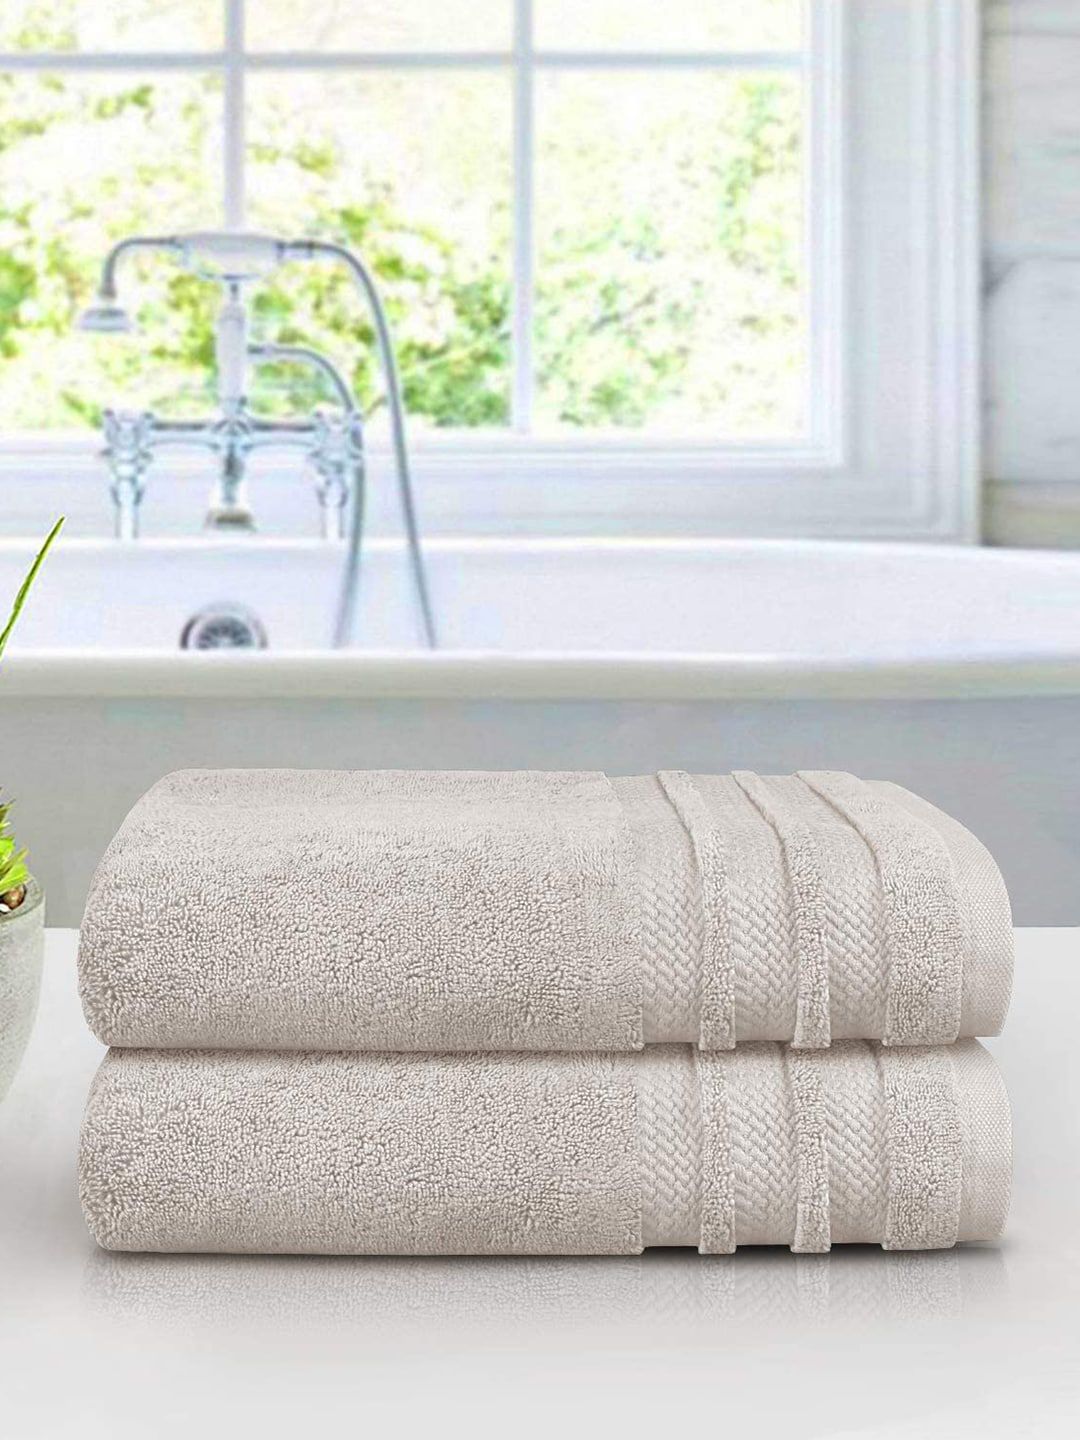 Trident 2 Piece Bath Towel Set Beige Luxury Collection 100% Cotton 625 GSM Price in India